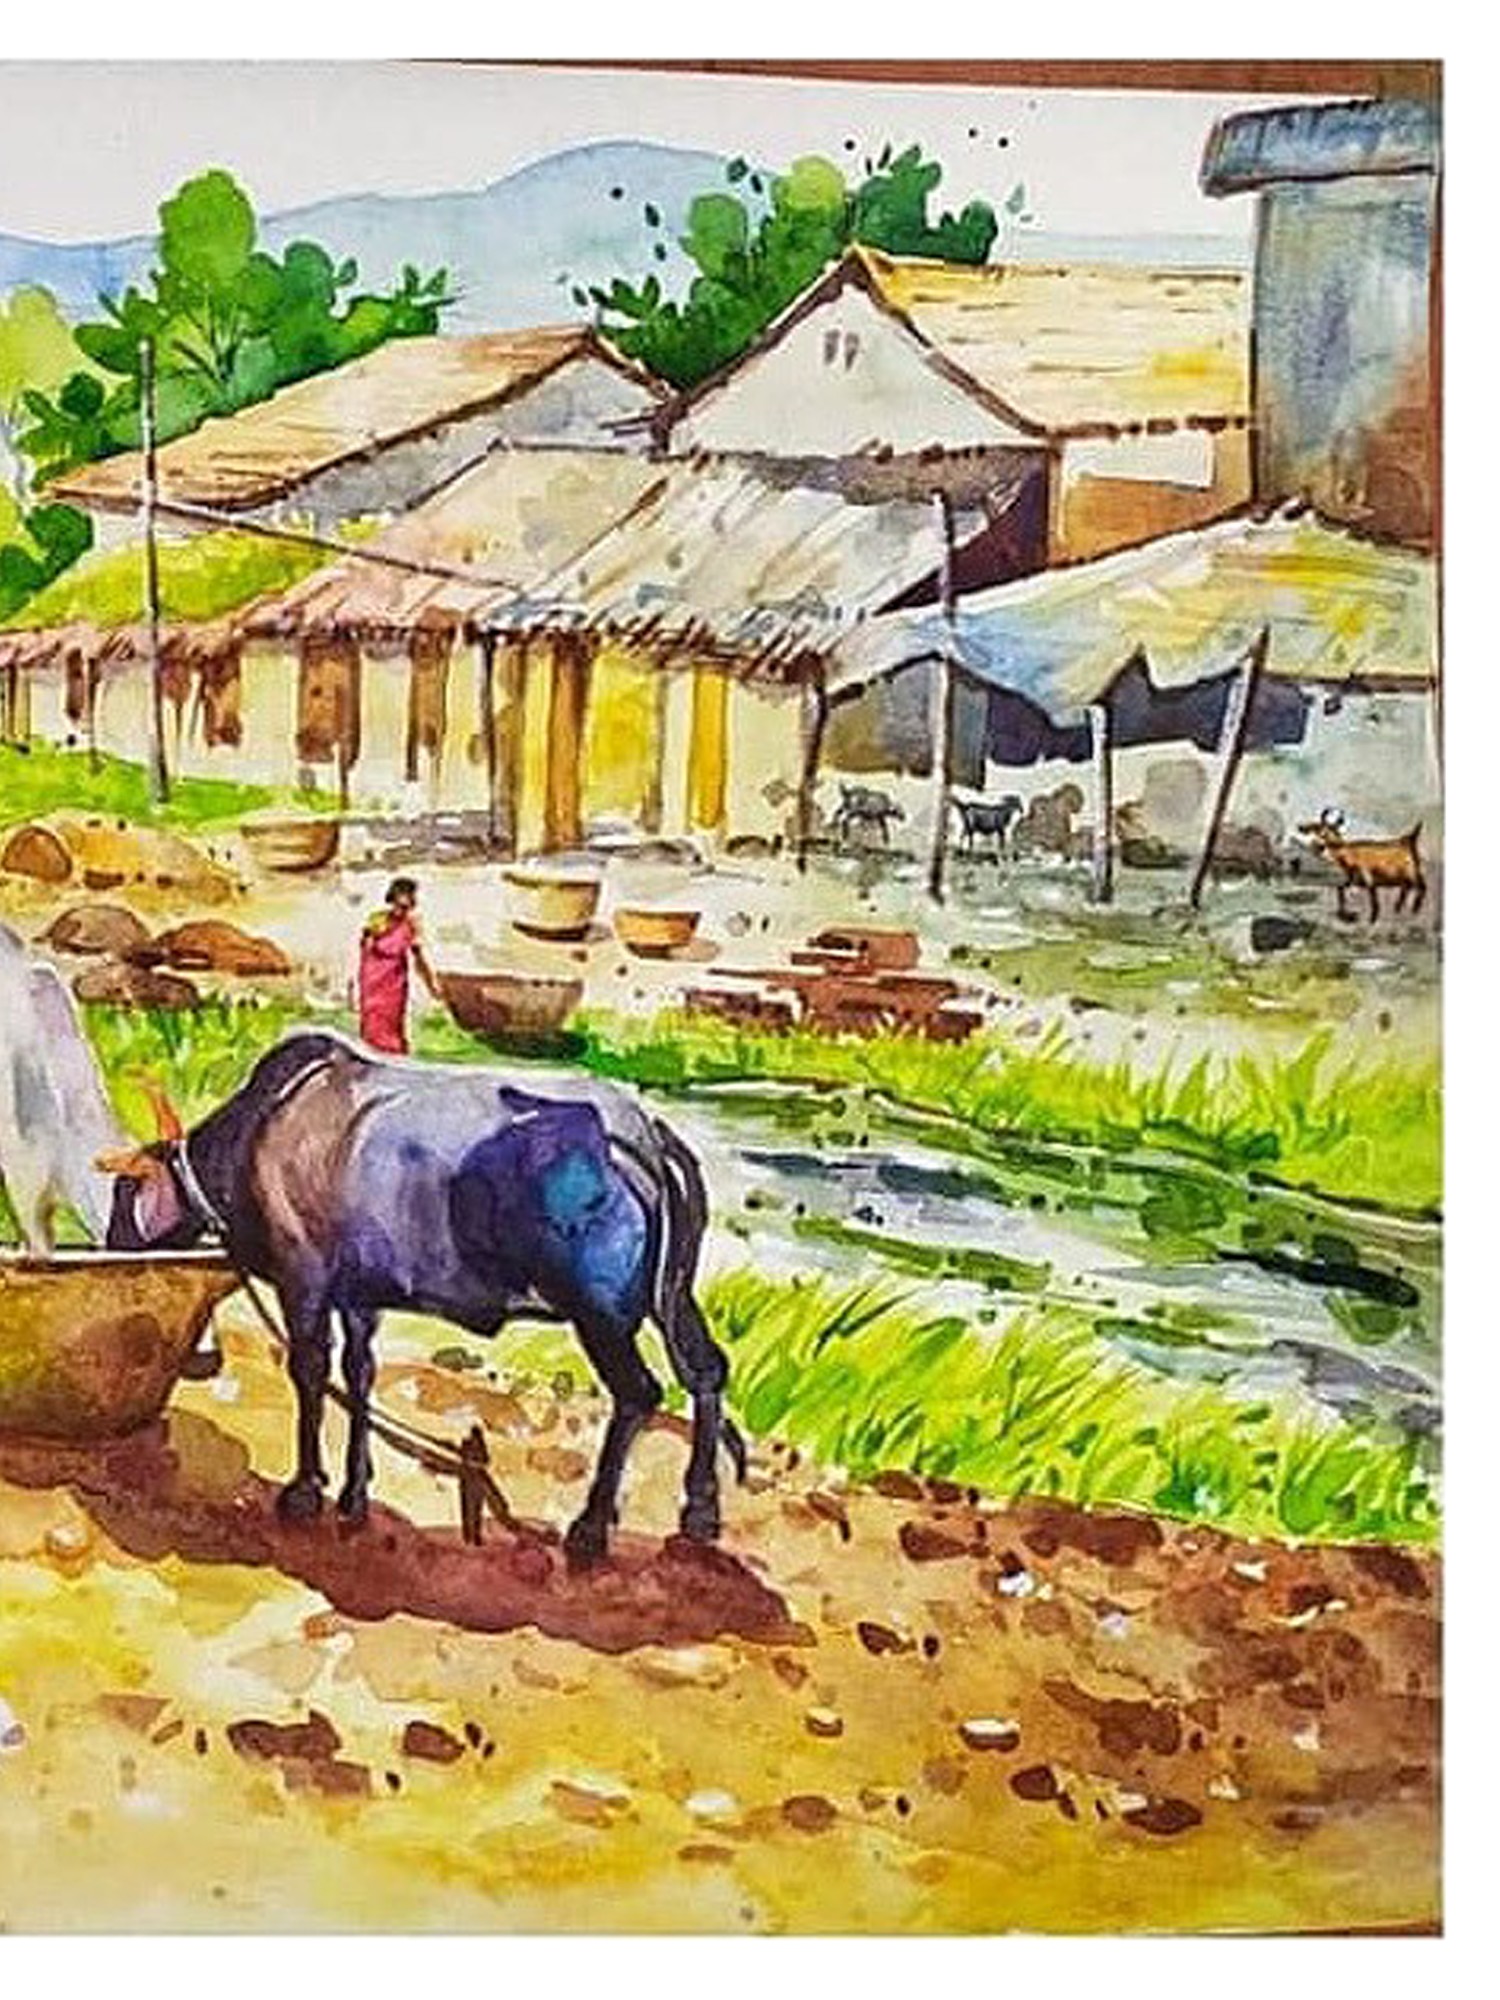 village life of kerala drawing/village life of Kerala painting/Kerala village  drawing - YouTube